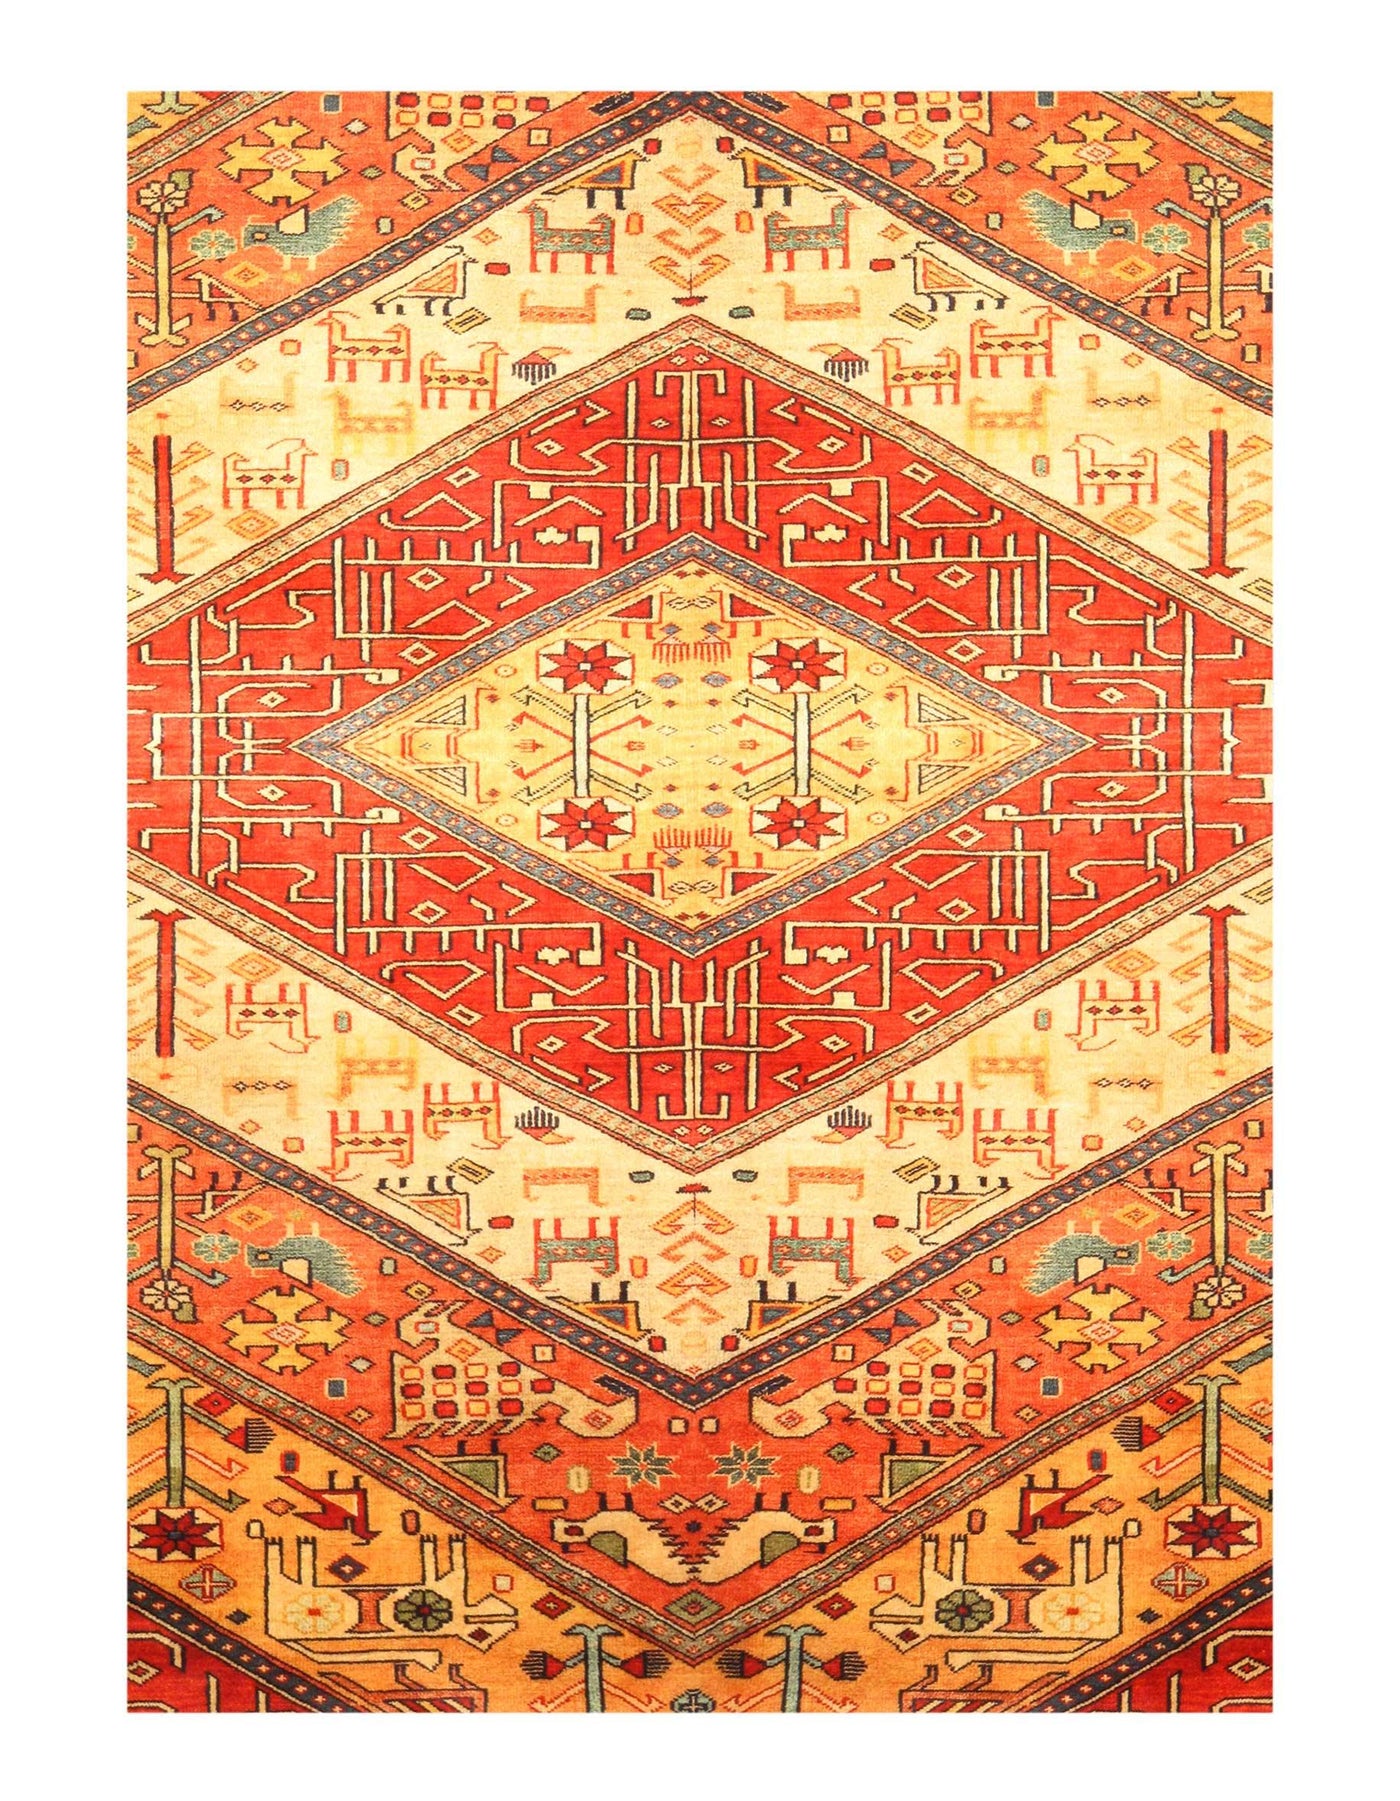 Canvello Vintage Persian Velvet table cloth - 3' X 3'